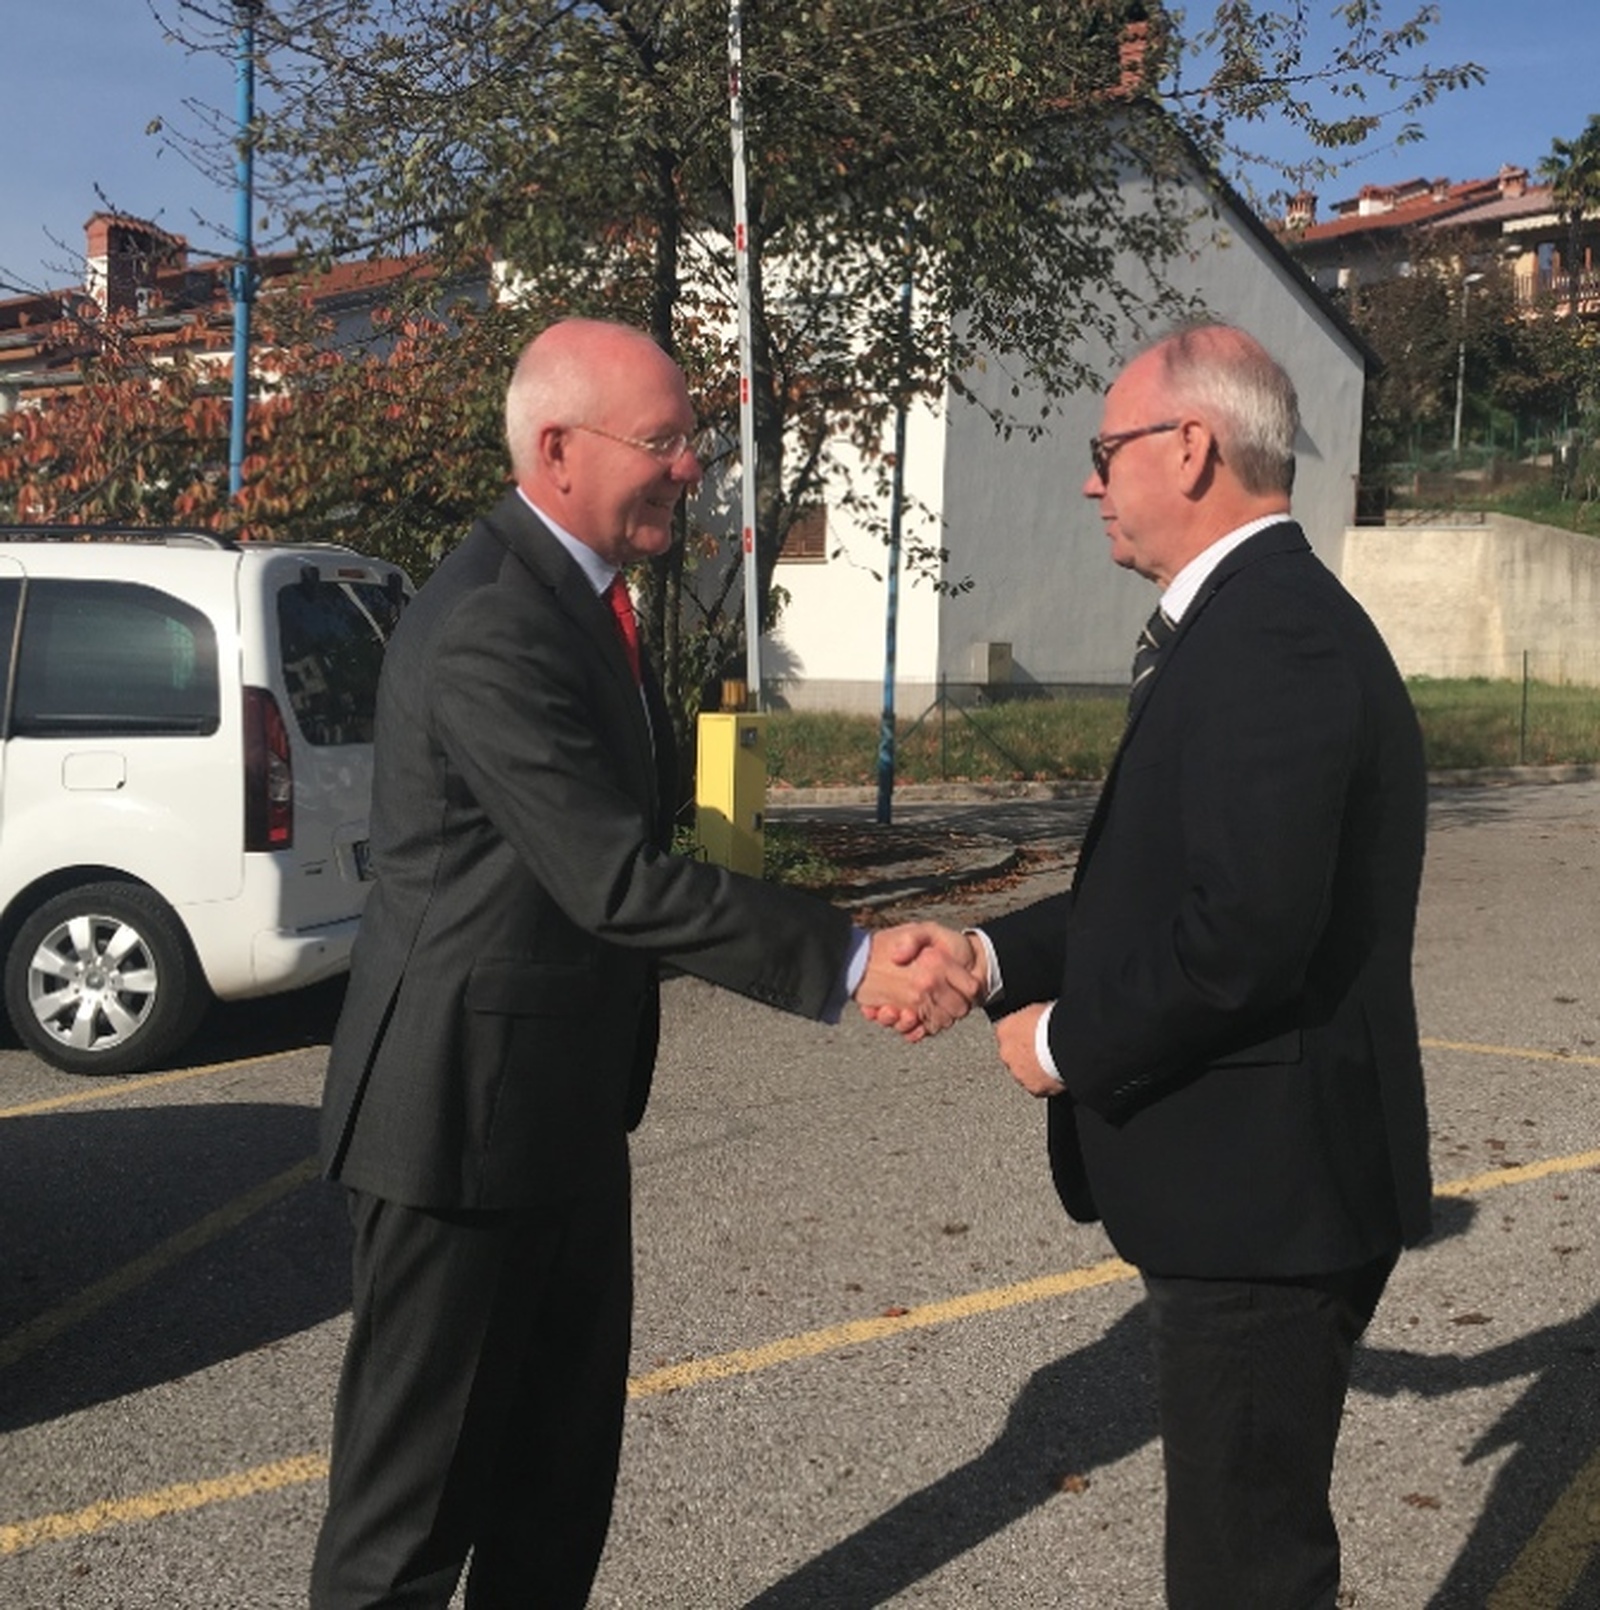 The Visit of the Dutch Ambassador at the University of Nova Gorica